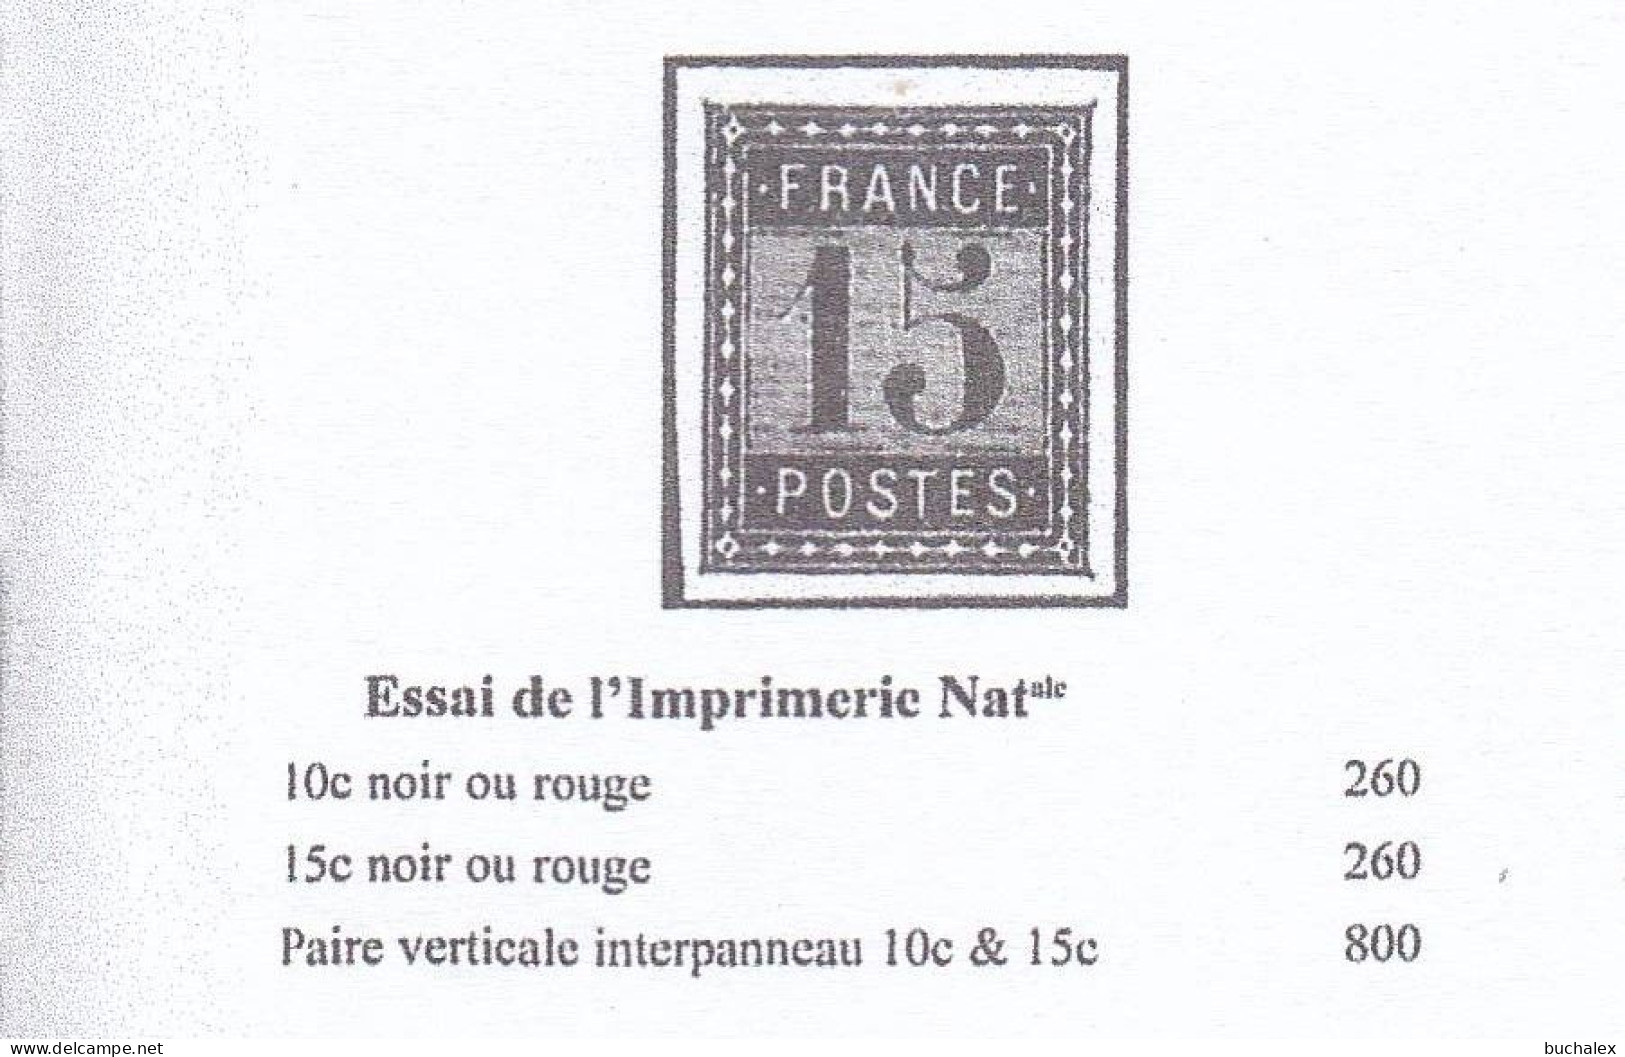 Frankreich Dreierstreifen Essays "De L'IMPRIMERIE NATIONALE",(*)/MNG, KW Maury 780 Euro - Proofs, Unissued, Experimental Vignettes